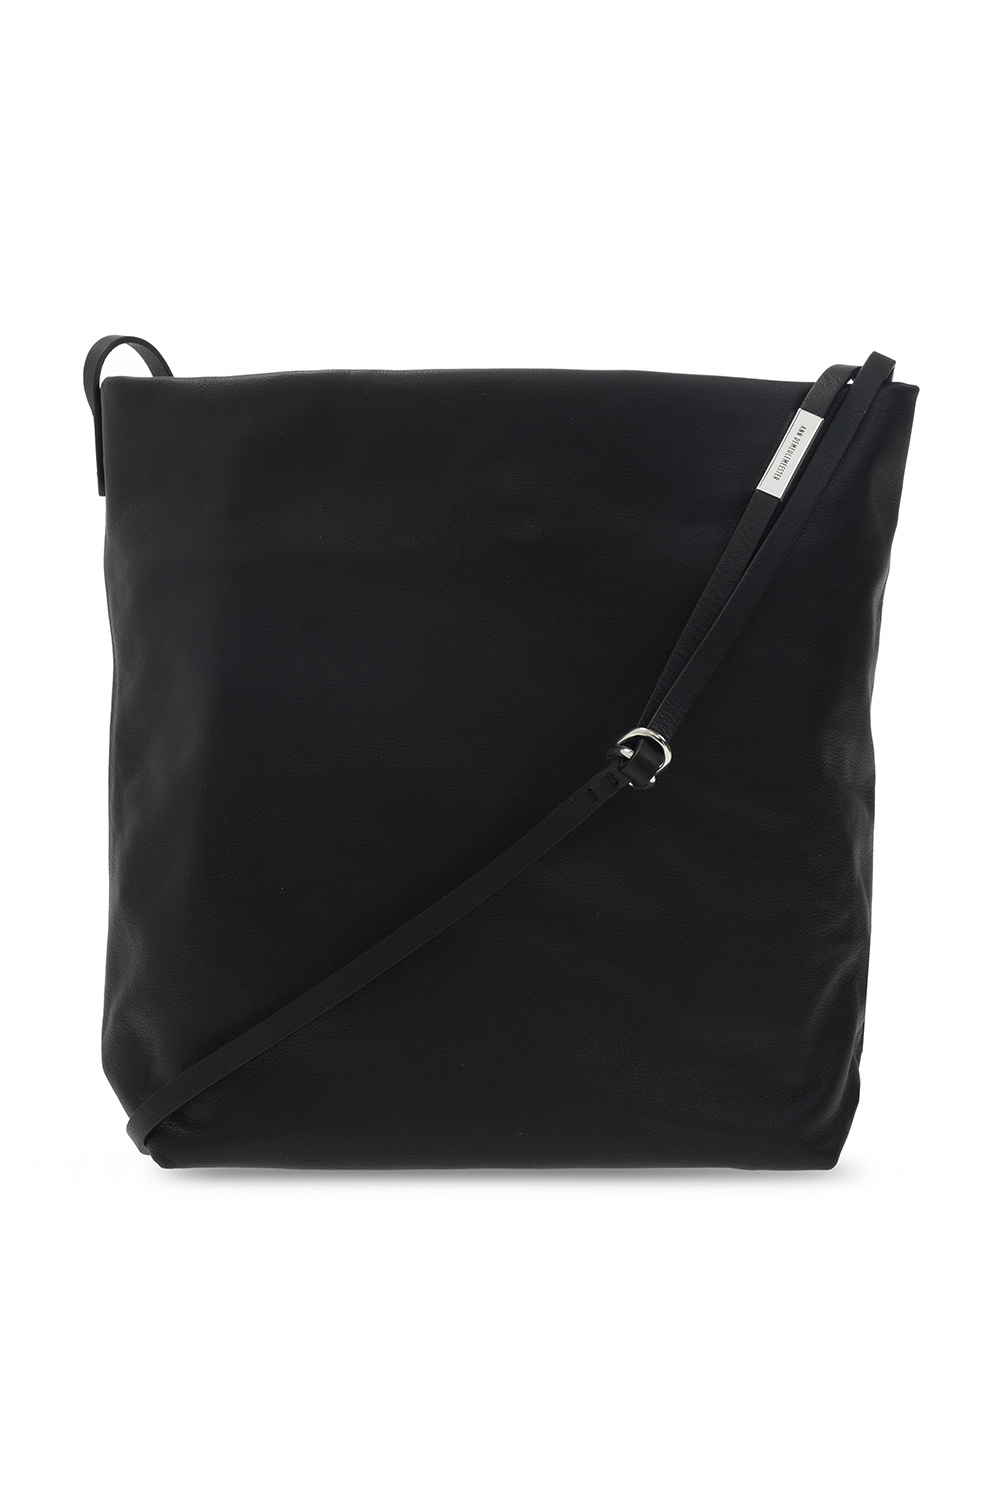 IetpShops Spain - Mochila Messenger-Bag Pro 39 l preto - Silver